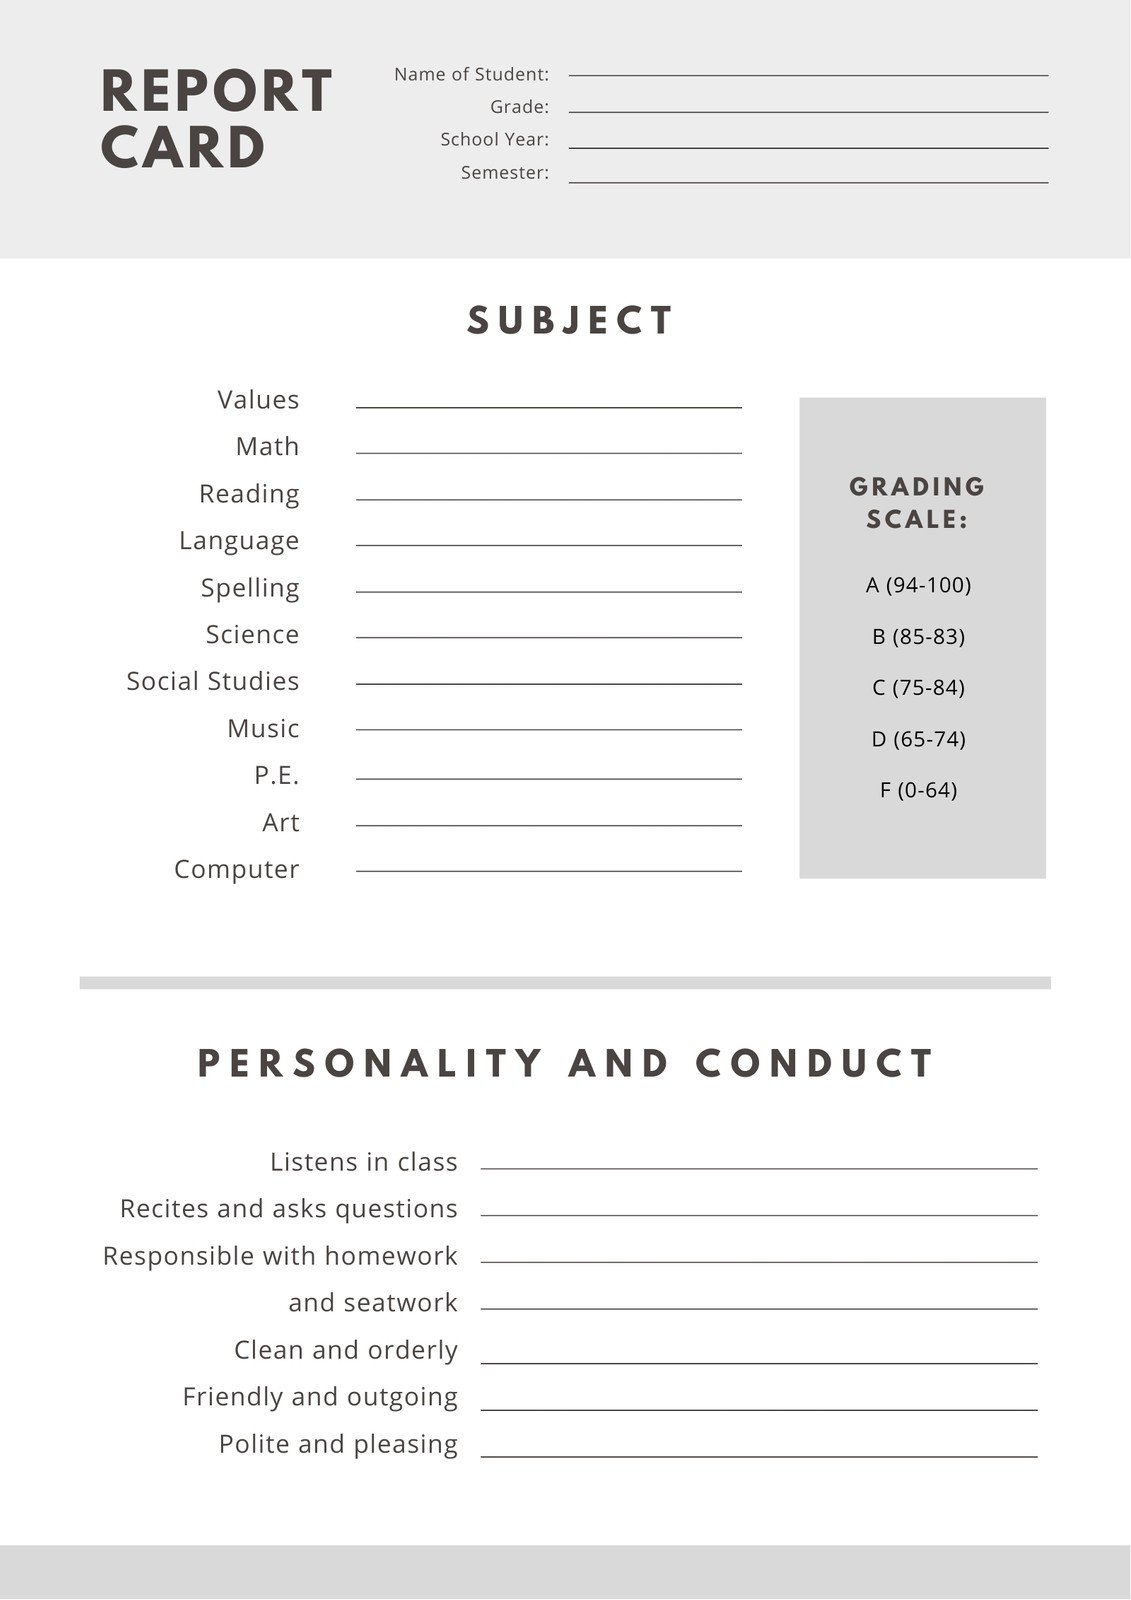 Free, printable, customizable report card templates  Canva Regarding Blank Report Card Template